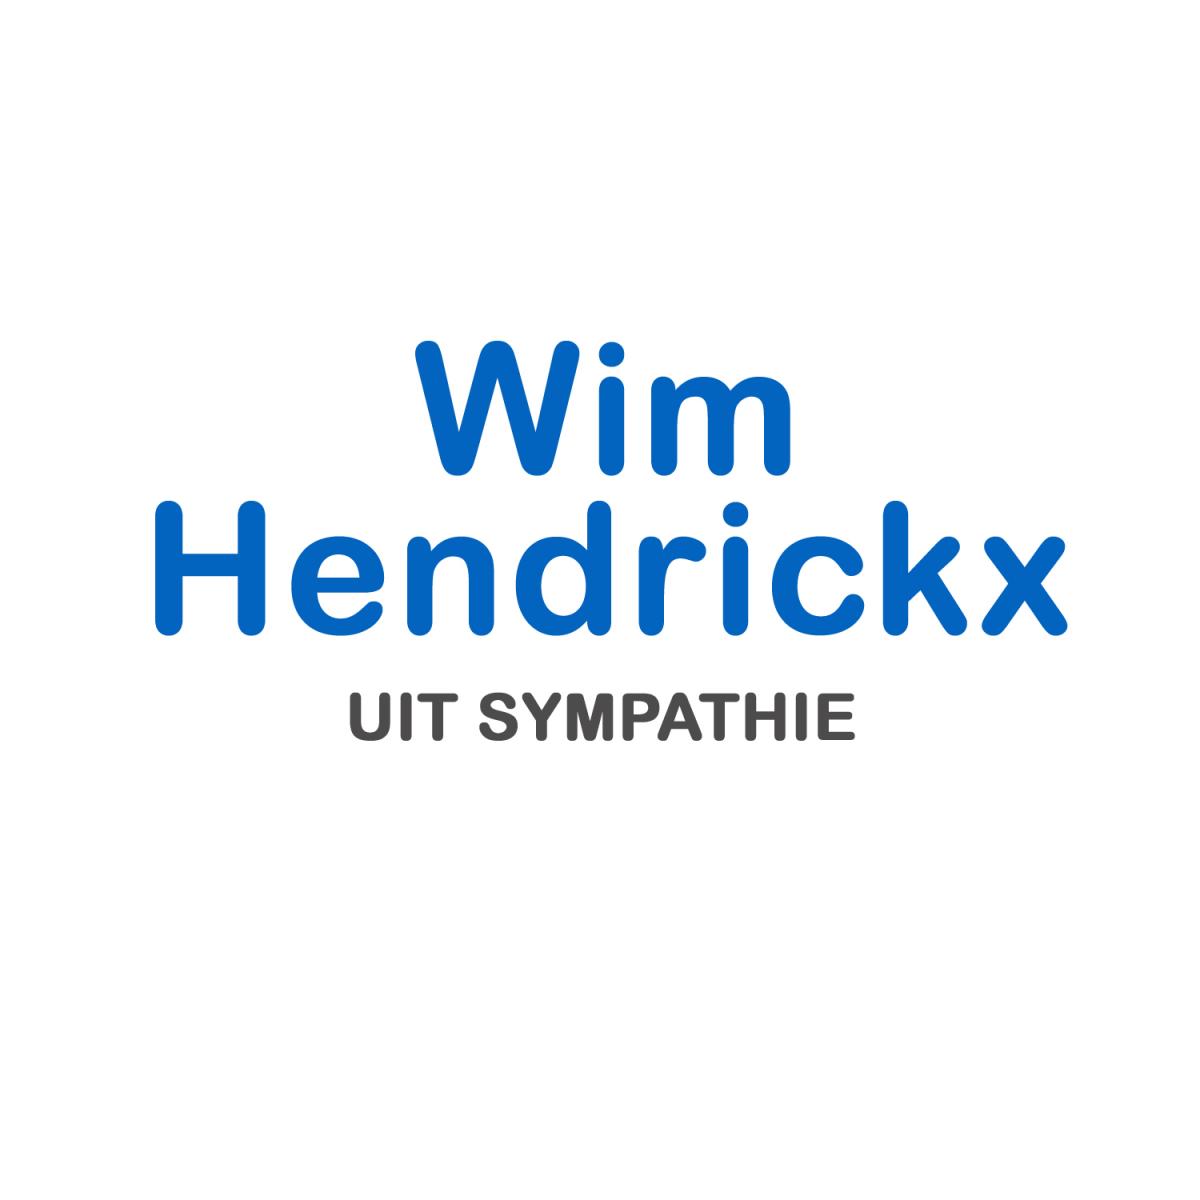 Wim Hendrickx